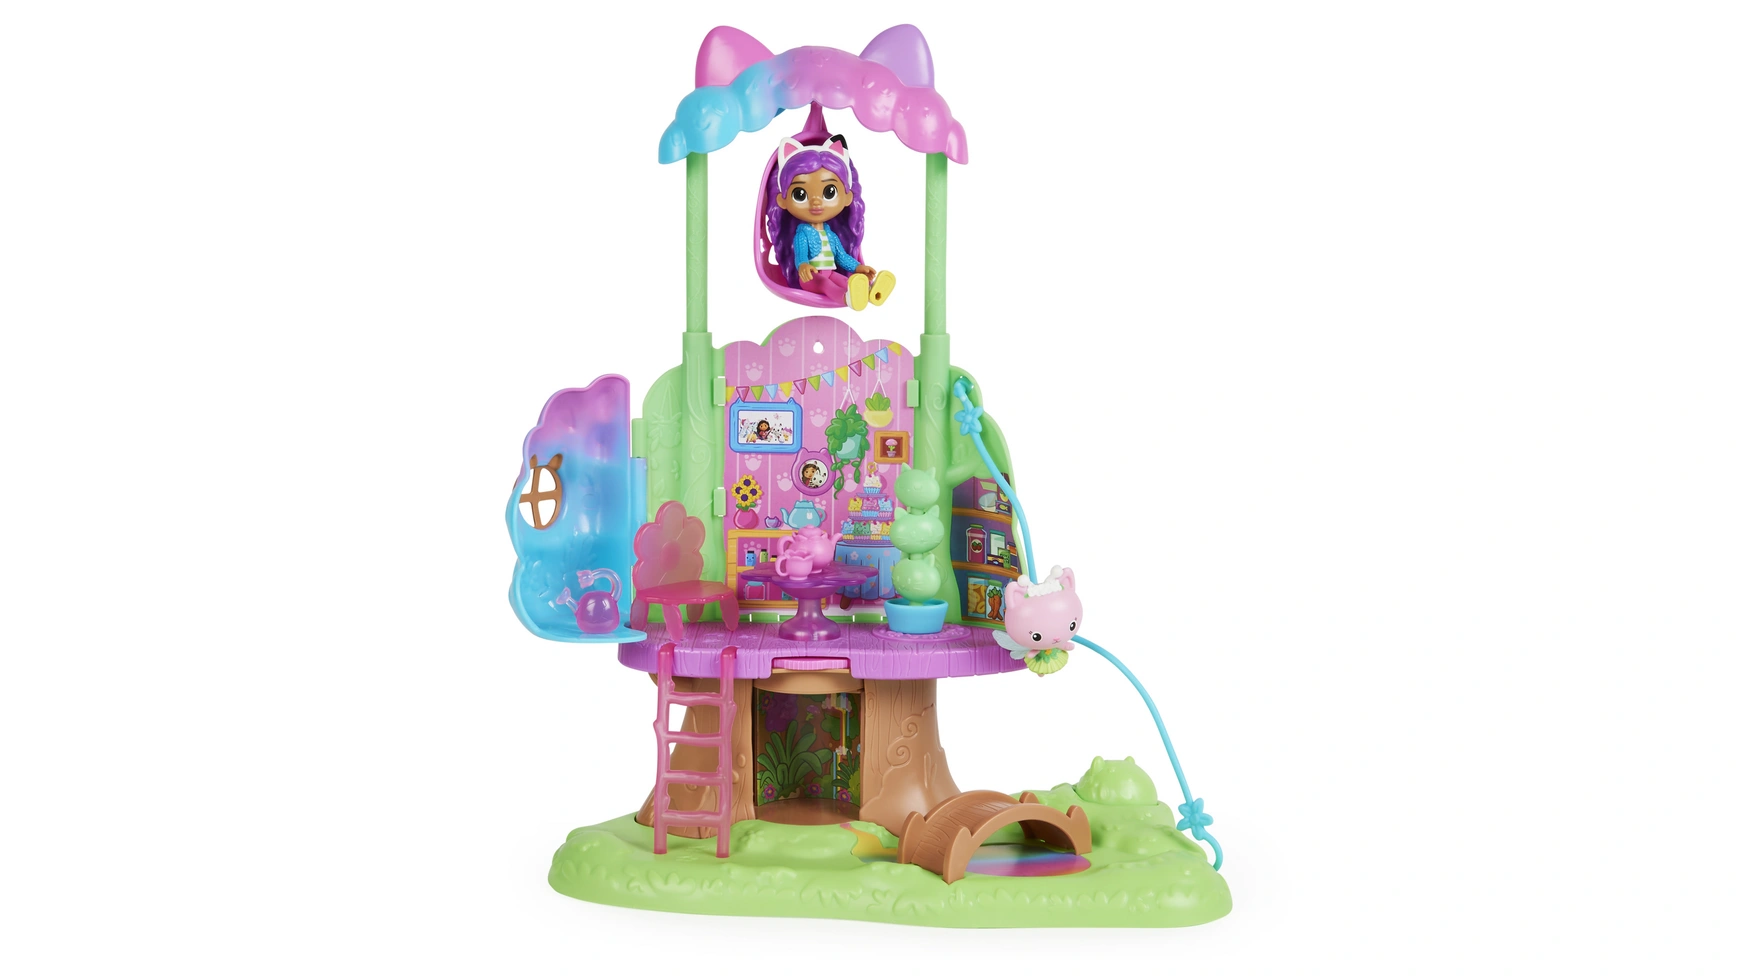 Gabbys Dollhouse Spin Master Садовый игровой набор Kitty Fairy трансформируемый домик на дереве с фигуркой Габби и кошки barbie dollhouse dreamhouse